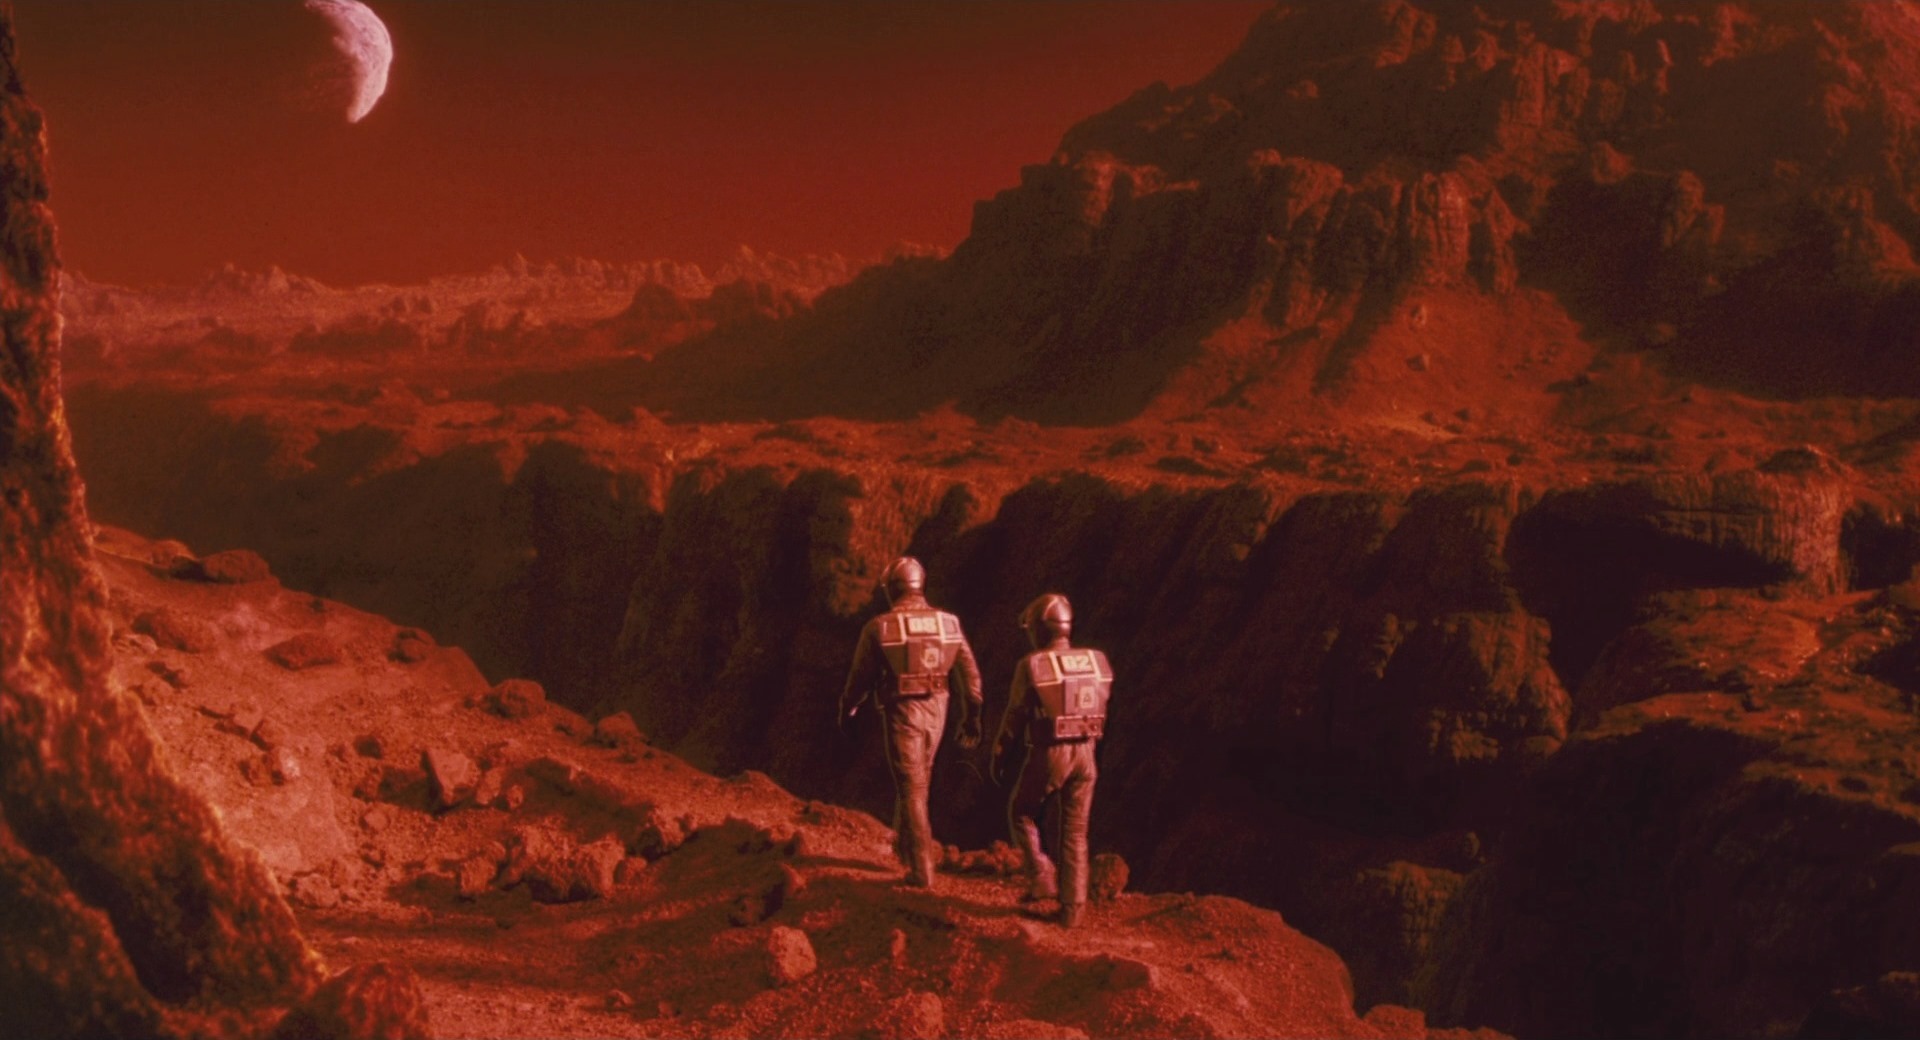 «Total Recall»: Αυξομειώνεται το επίπεδο του οξυγόνου στον πλανήτη Άρη «σα να το παράγουν μηχανές» λέει η NASA